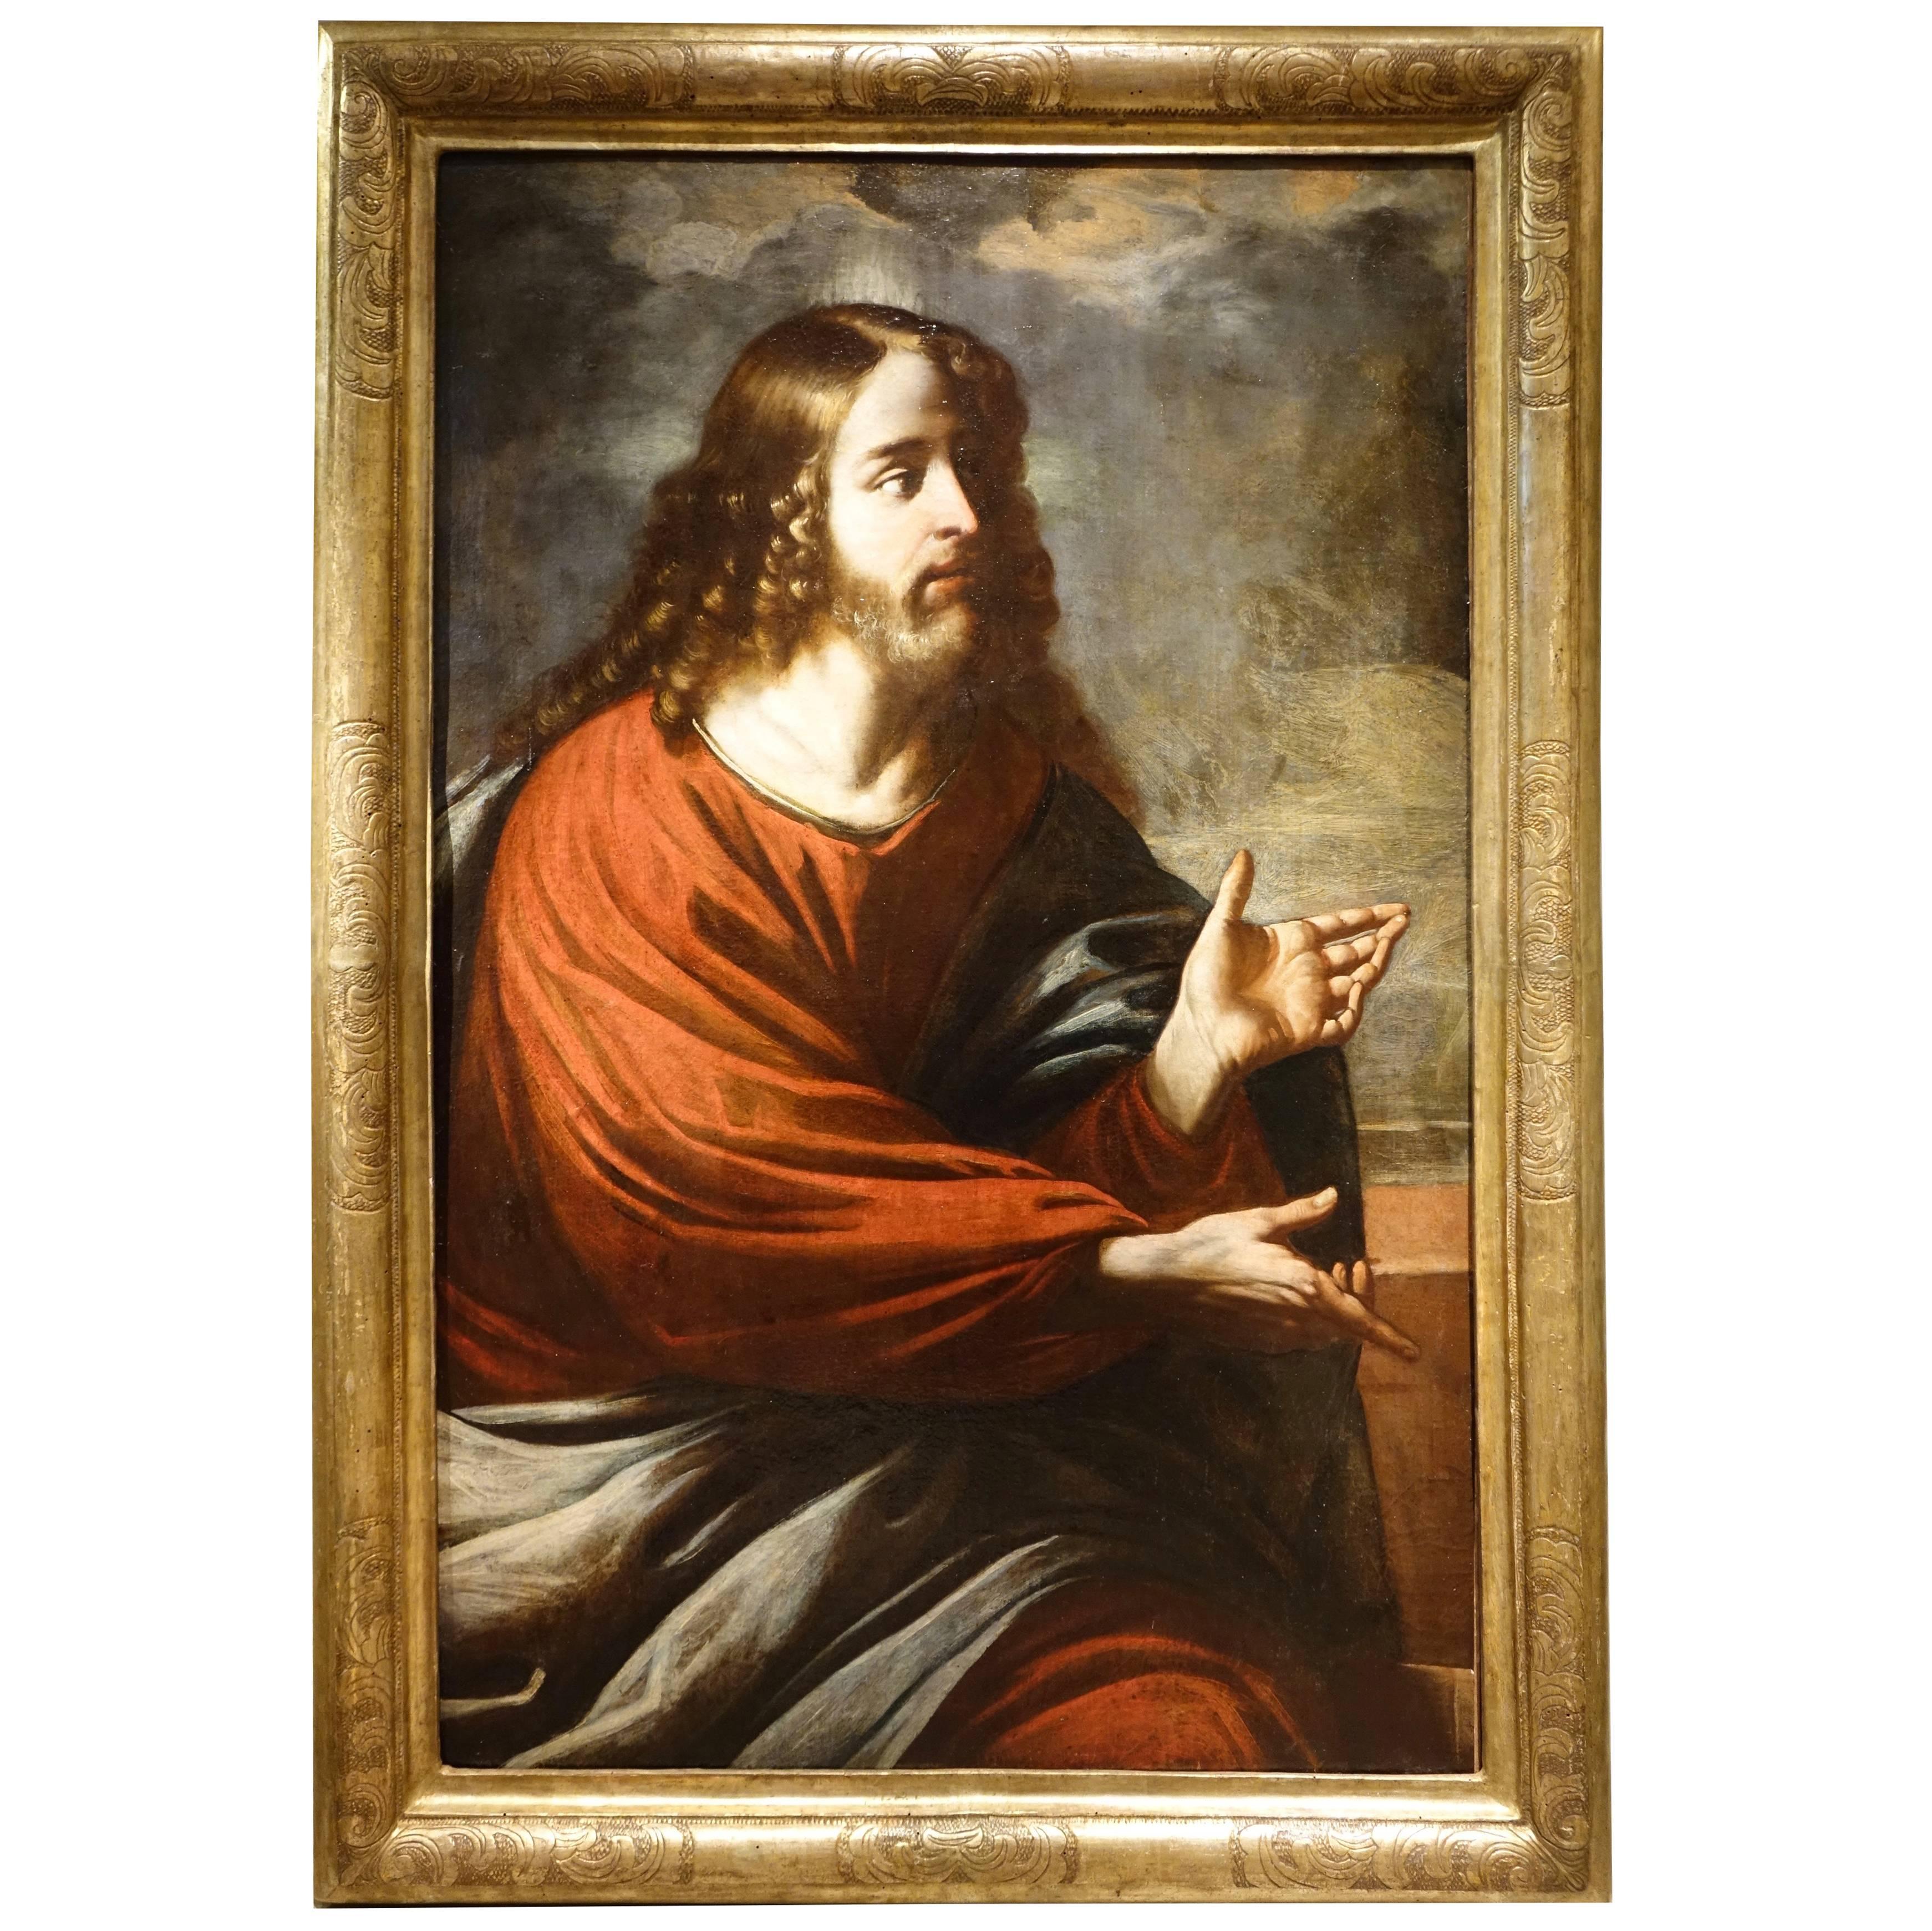  A Painting Representing the Christ Preaching,  Italian School, circa 1620